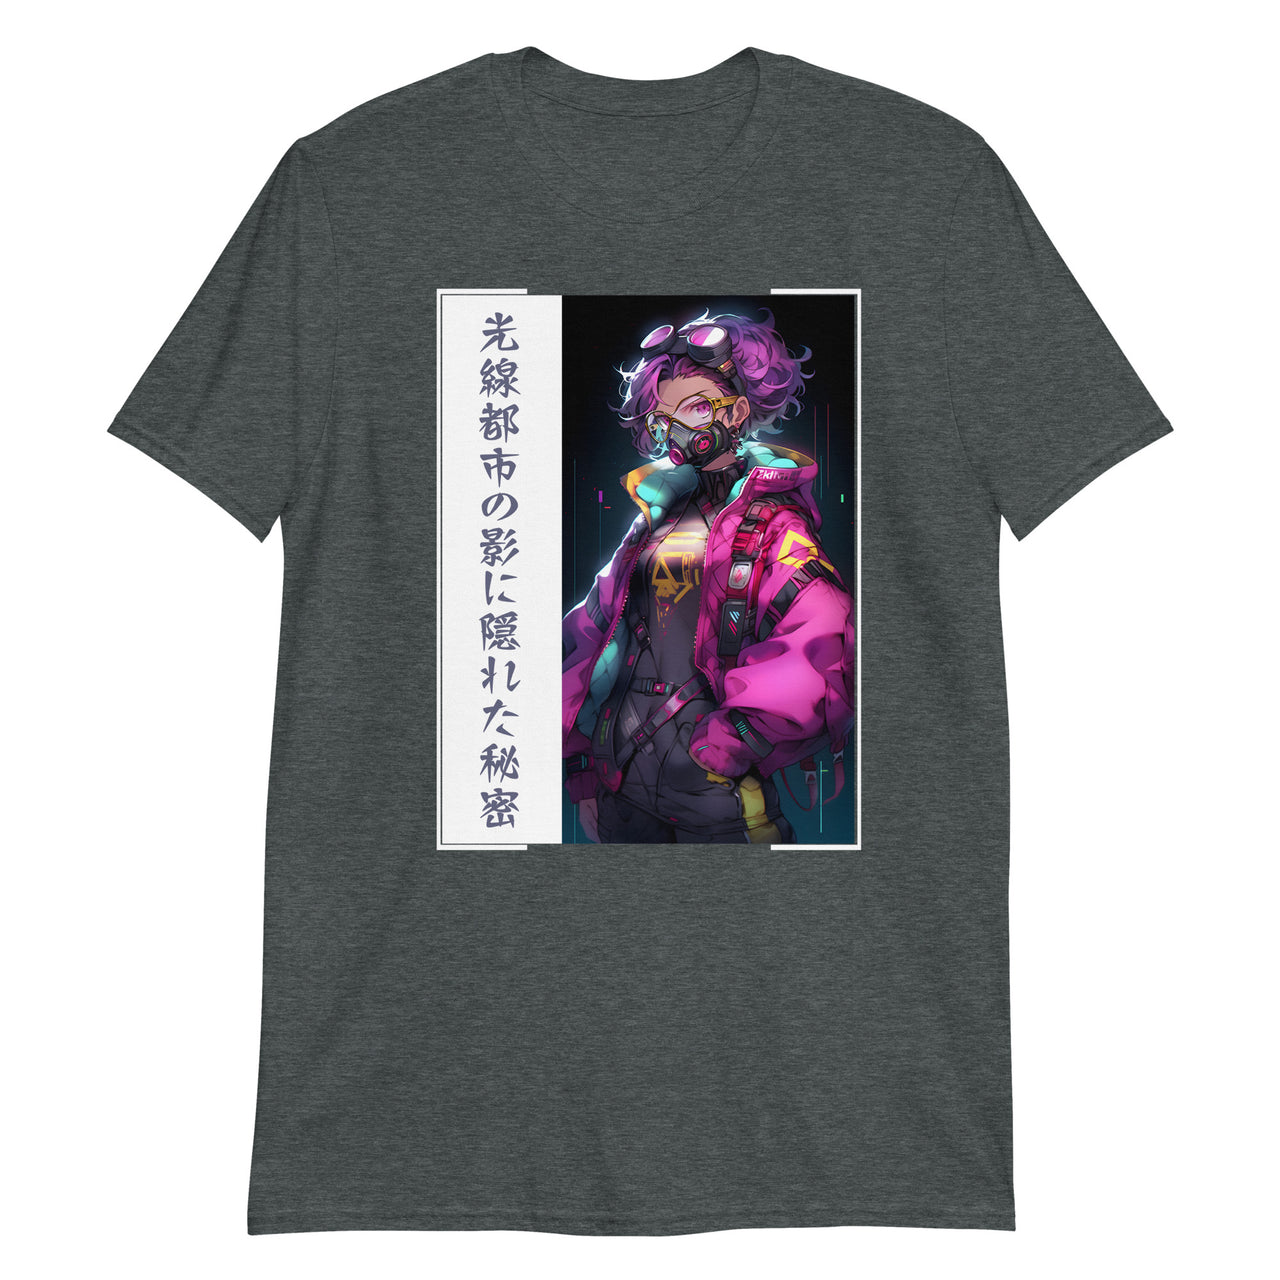 Gritty Tokyo Cyberpunk Anime Girl T-Shirt